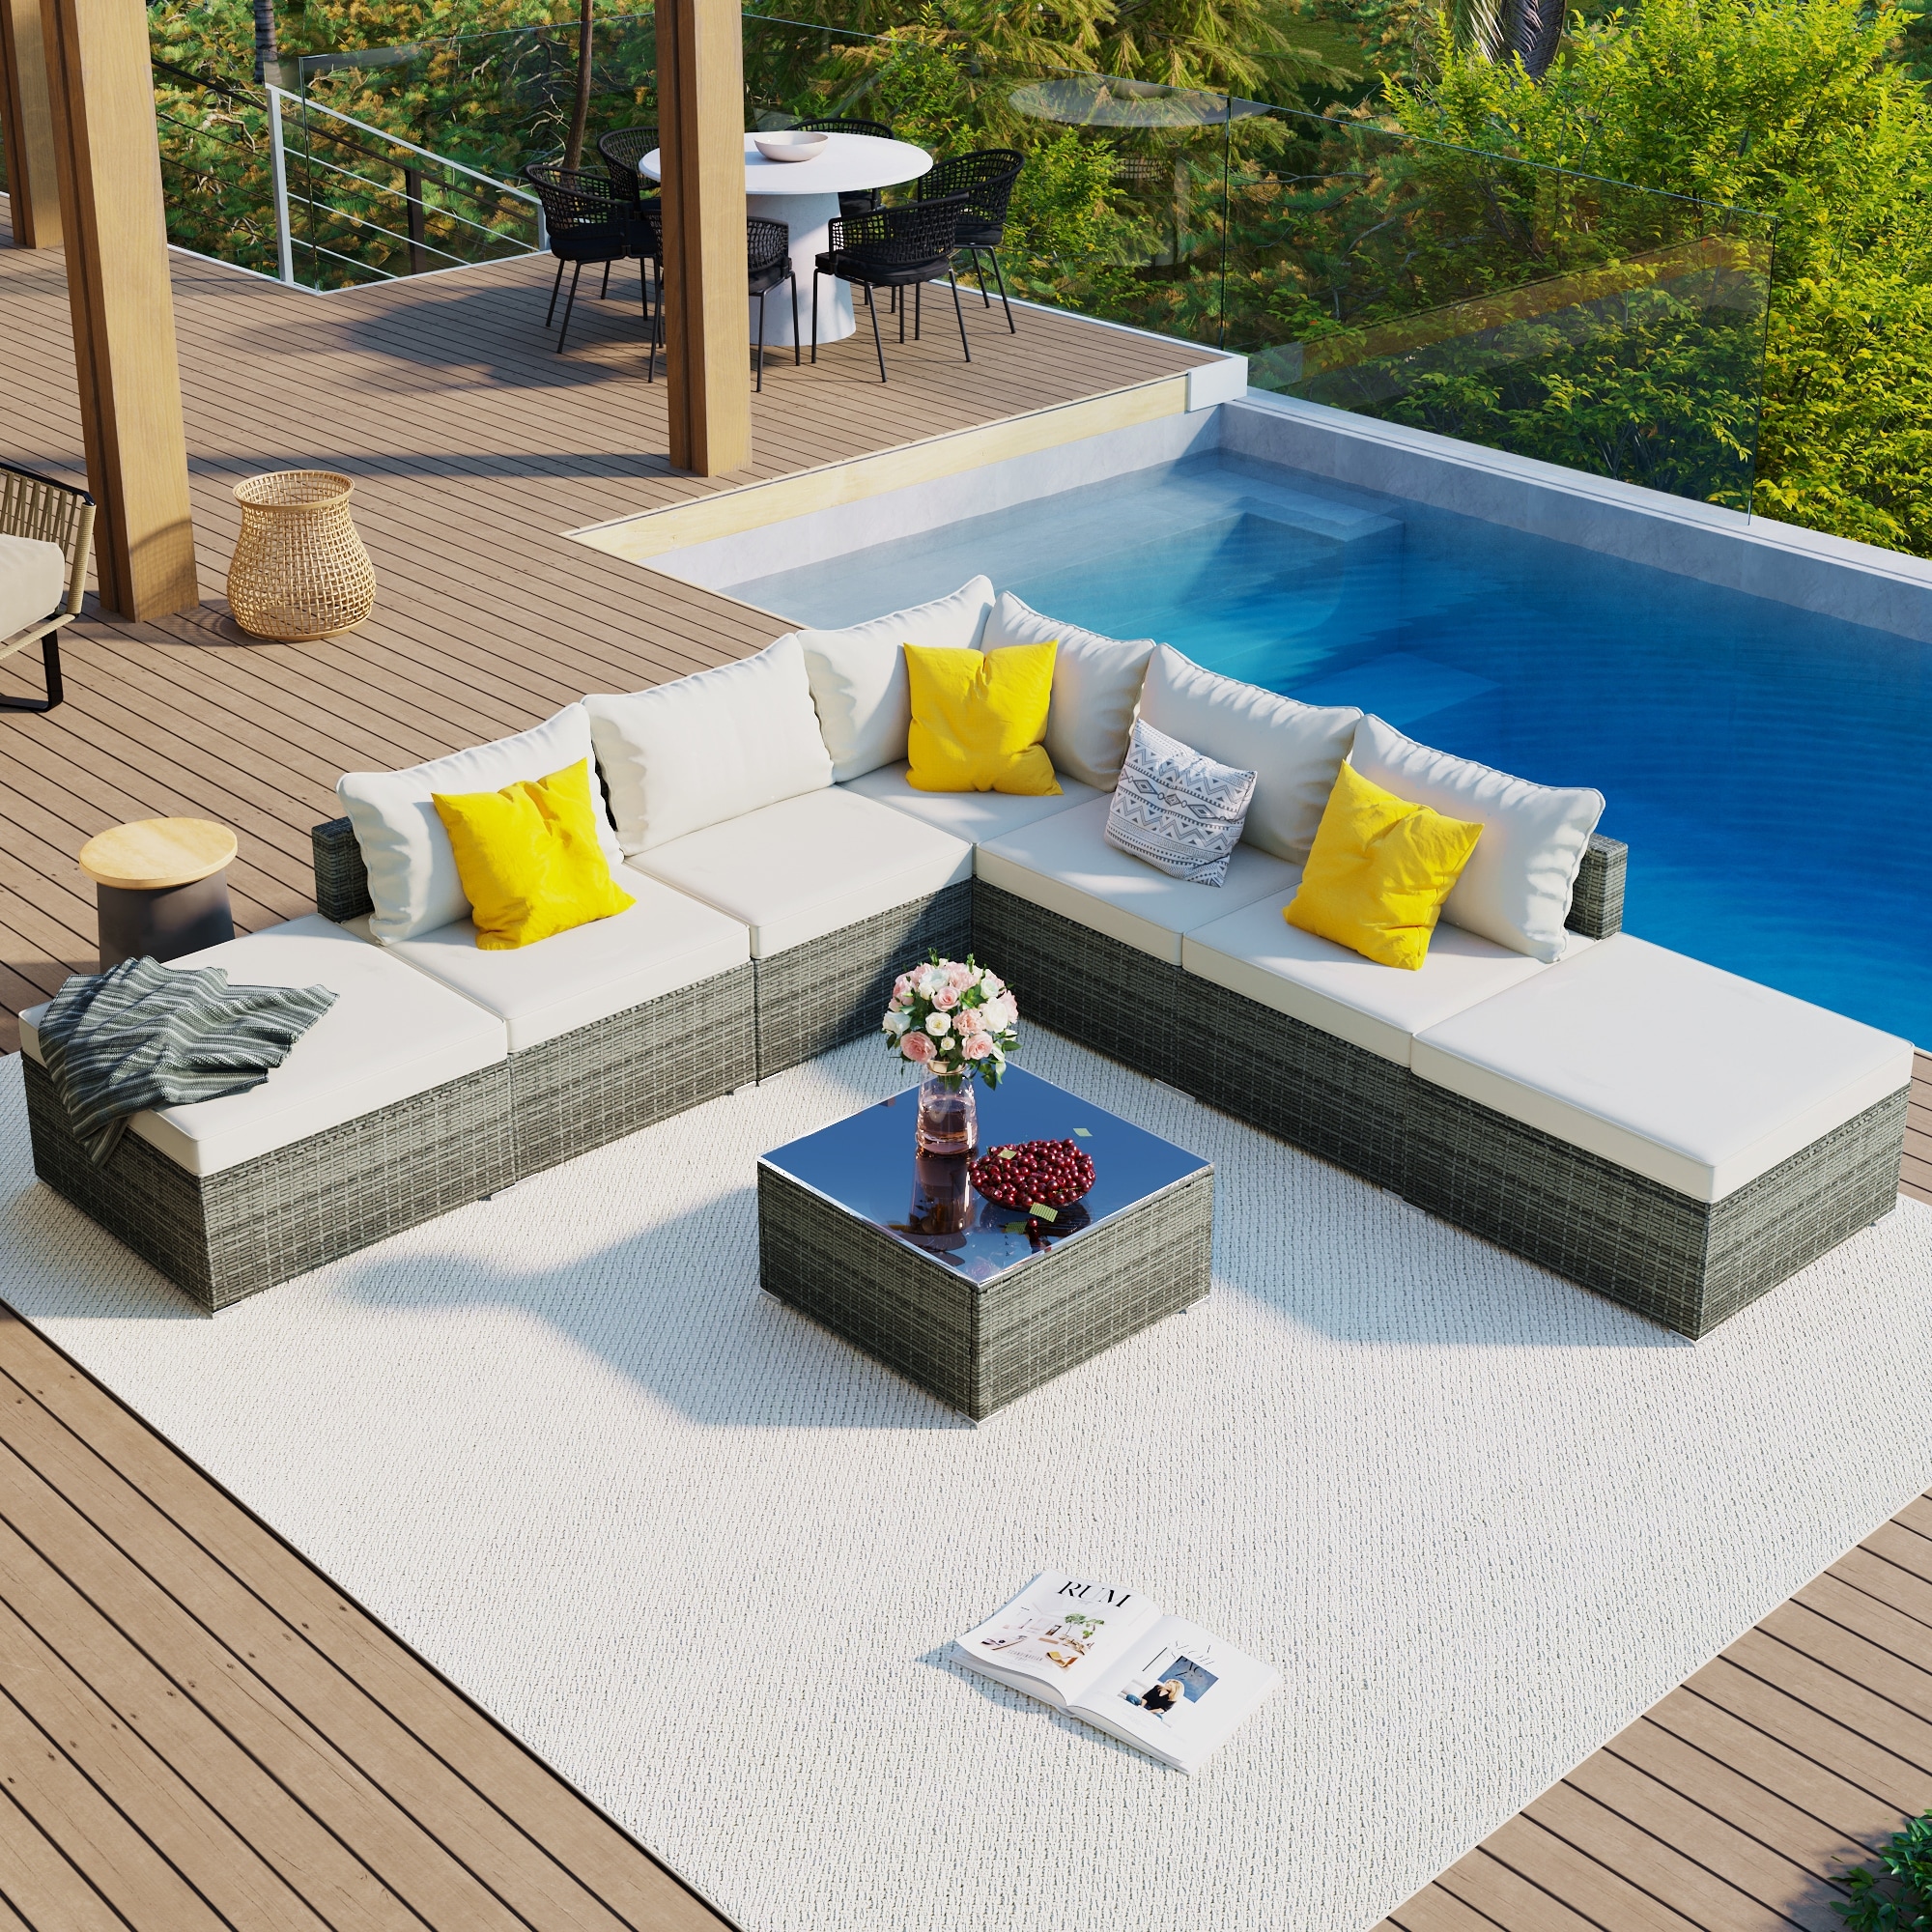 8-pieces Outdoor Patio Furniture Sets  Garden Conversation Wicker Sectional Sofa Set  Modular Sofa Design  Upholstered Cushions